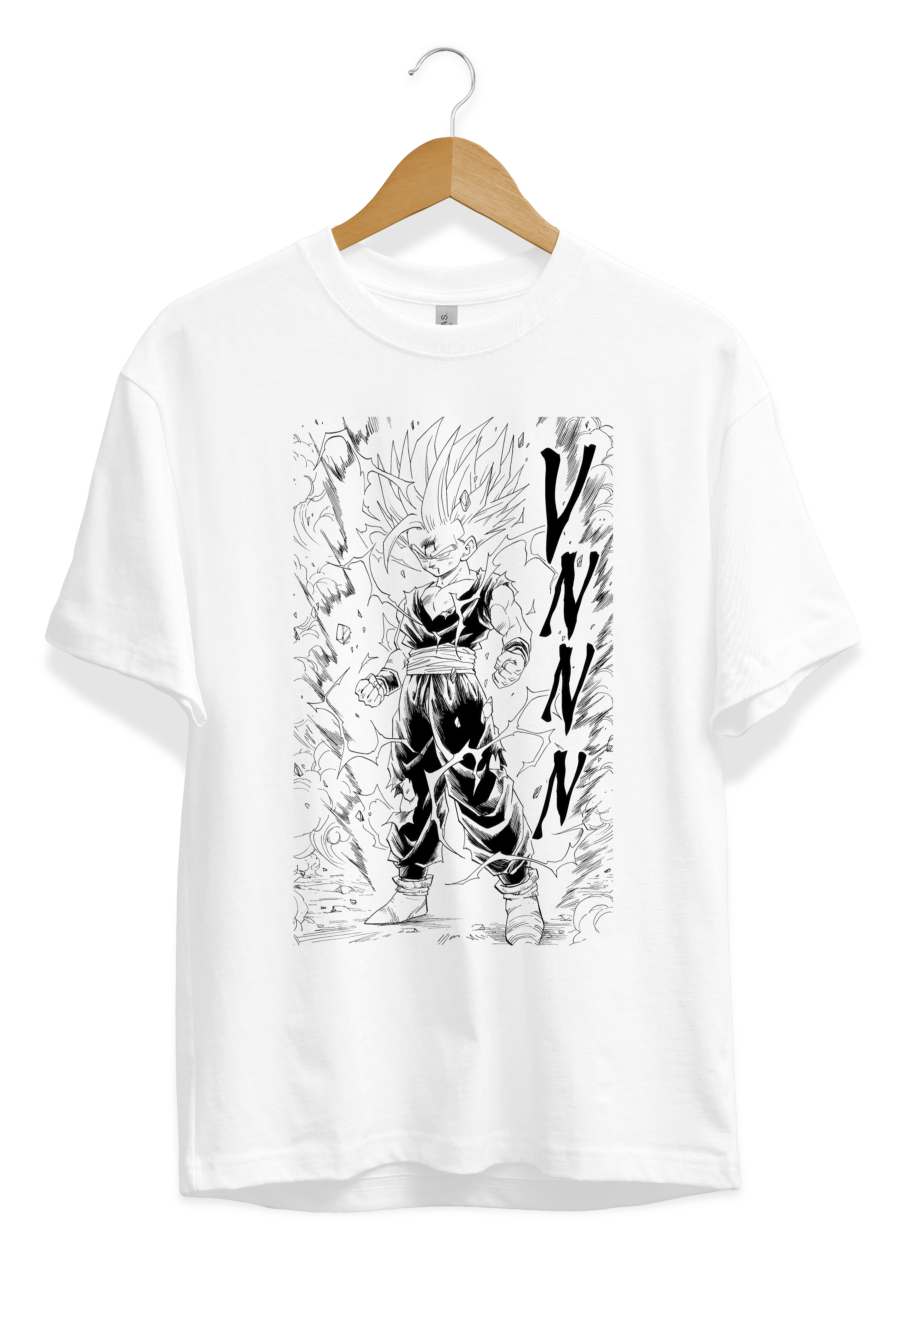 Gohan's Rage-Induced Transformation vs. Cell T-Shirt T-Shirt Design